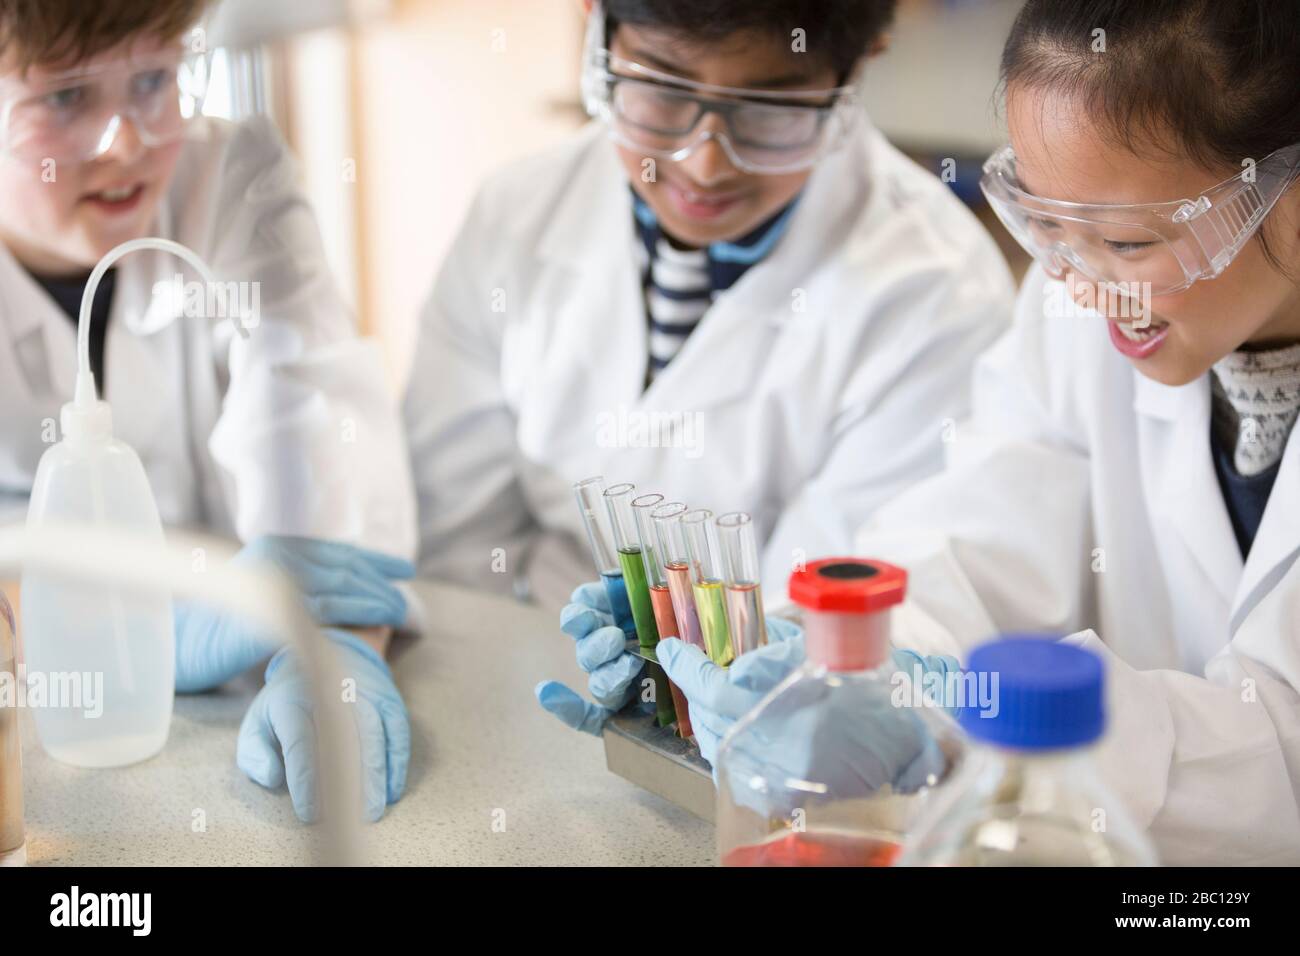 Students examining liquids in test tube rack, conducting scientific experiment in laboratory classroom Stock Photo